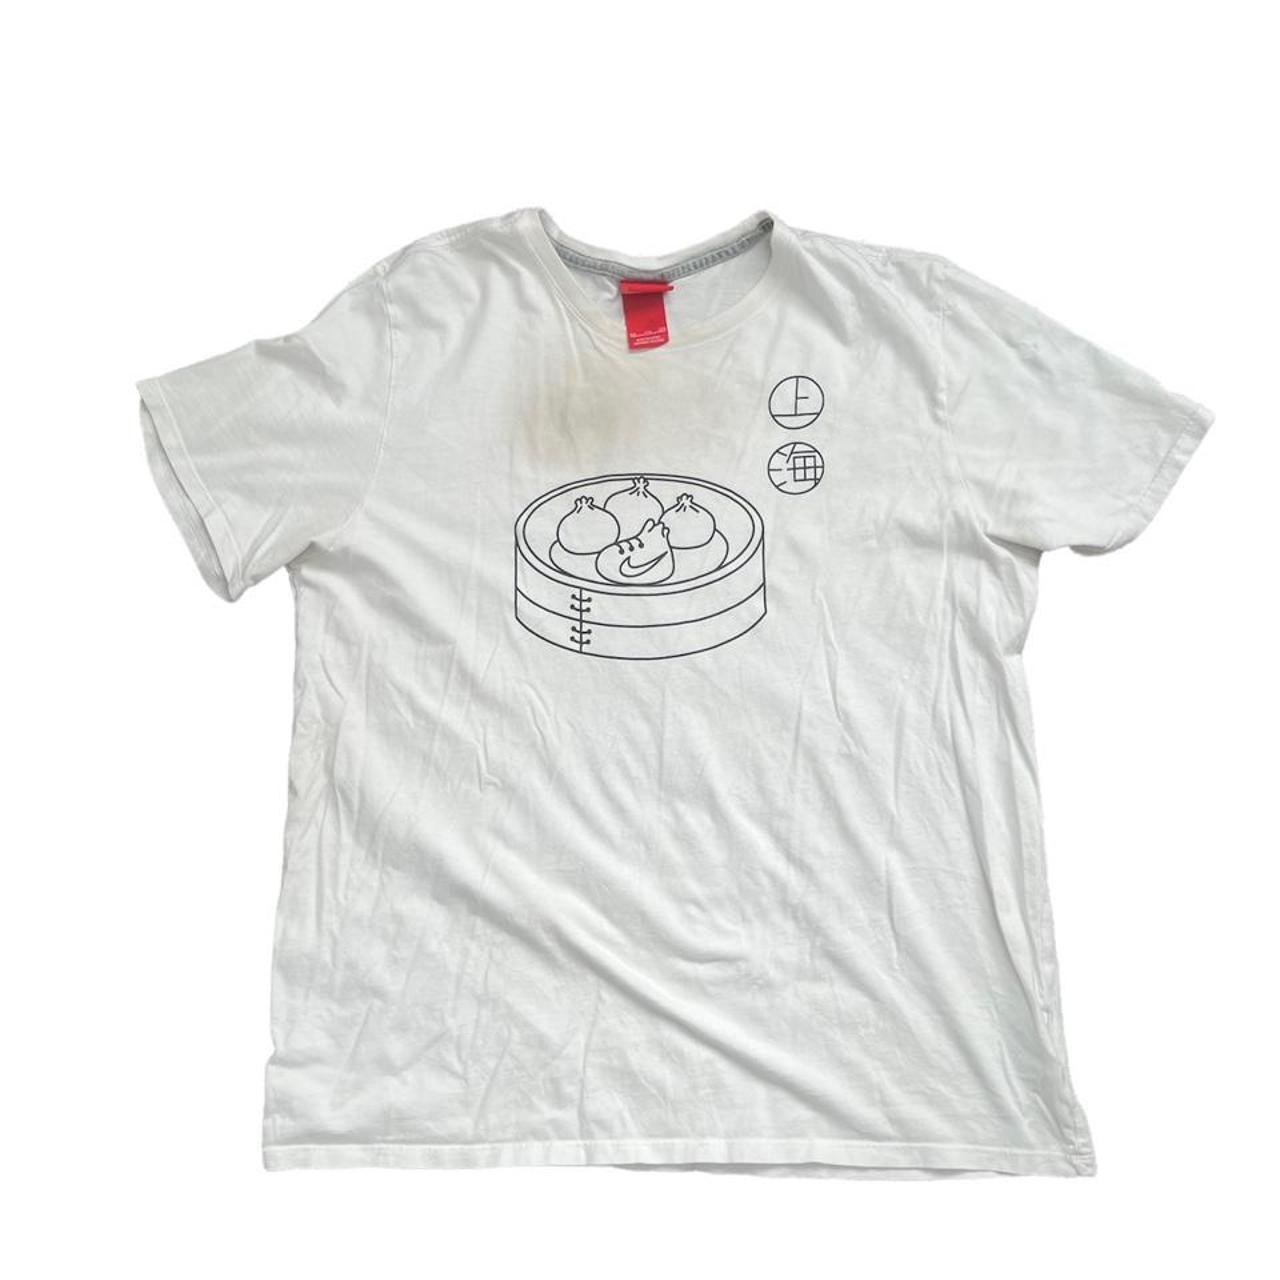 Sastre borroso Terapia Nike white short sleeve tee shirt size xxl dumpling... - Depop